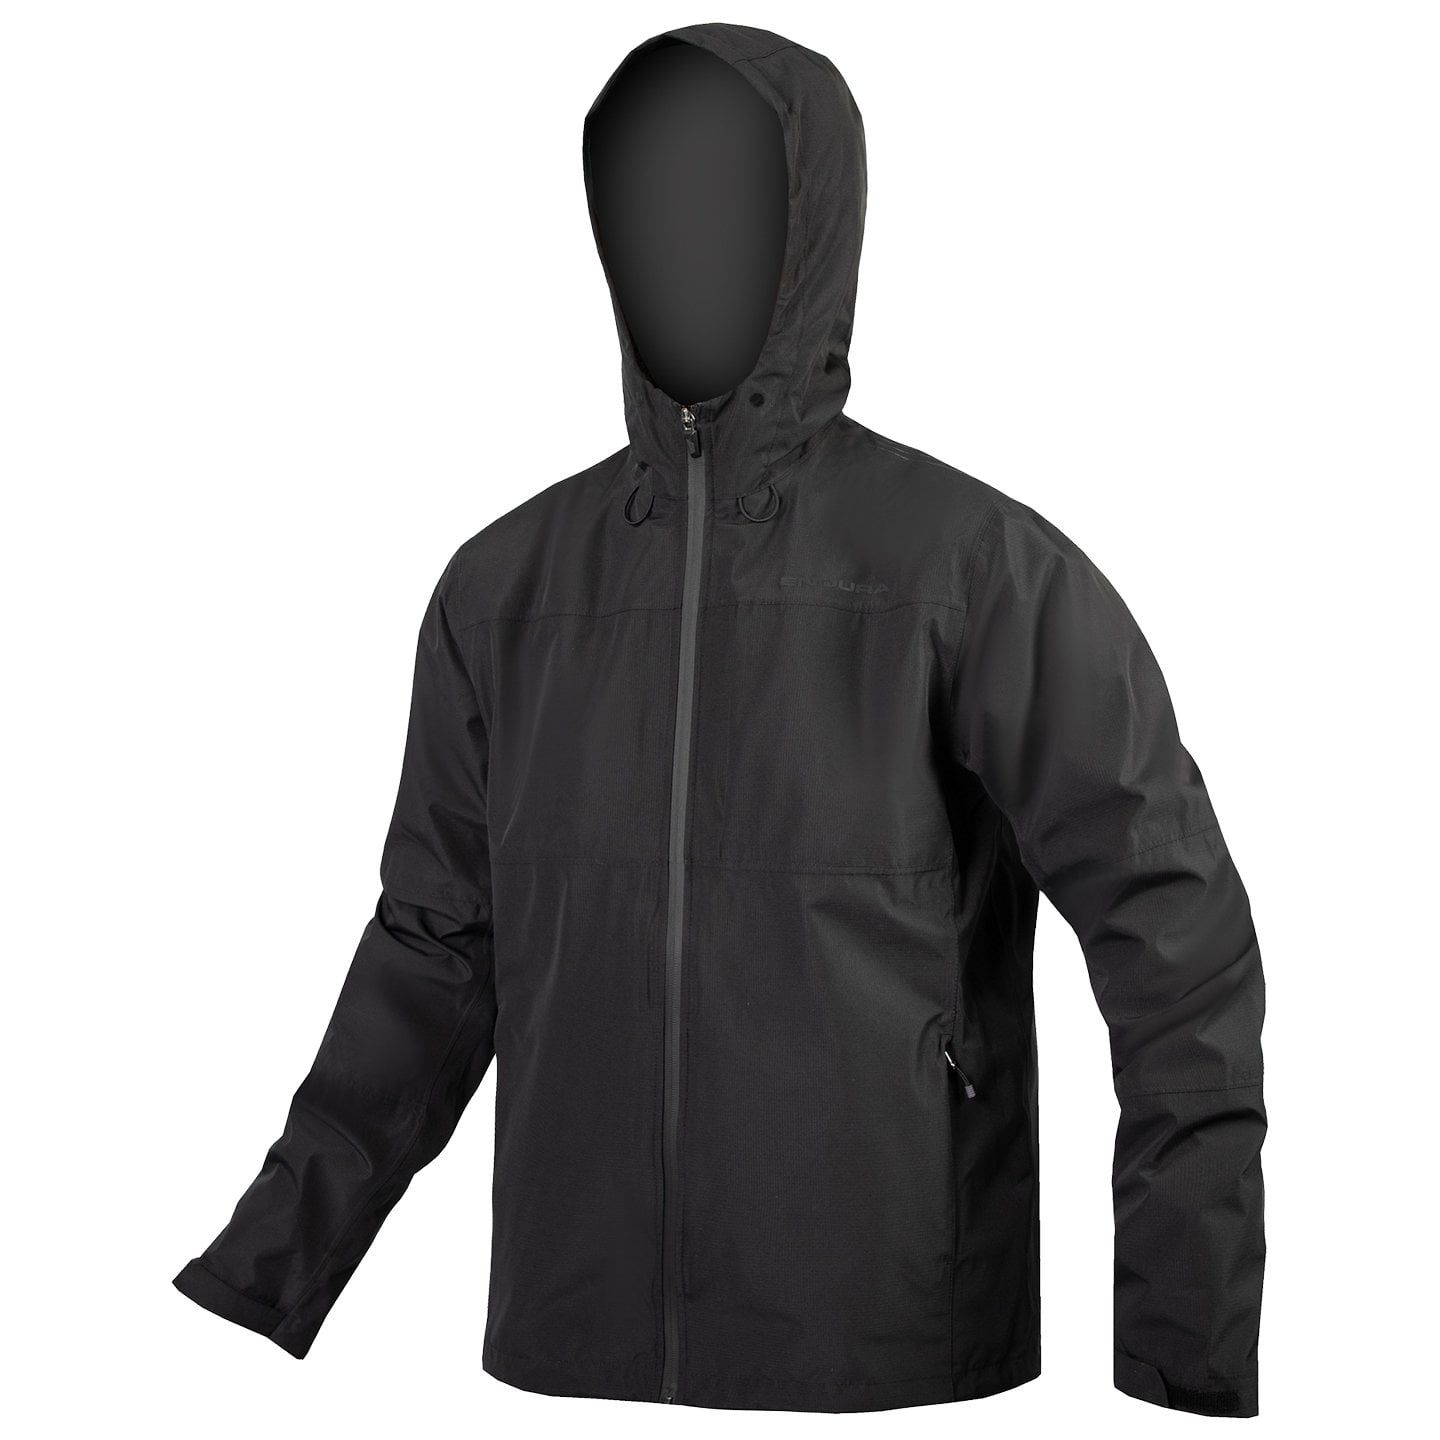 ENDURA Hummvee 3 in 1 Multifunctional Jacket, for men, size L, Cycle jacket, Rainwear